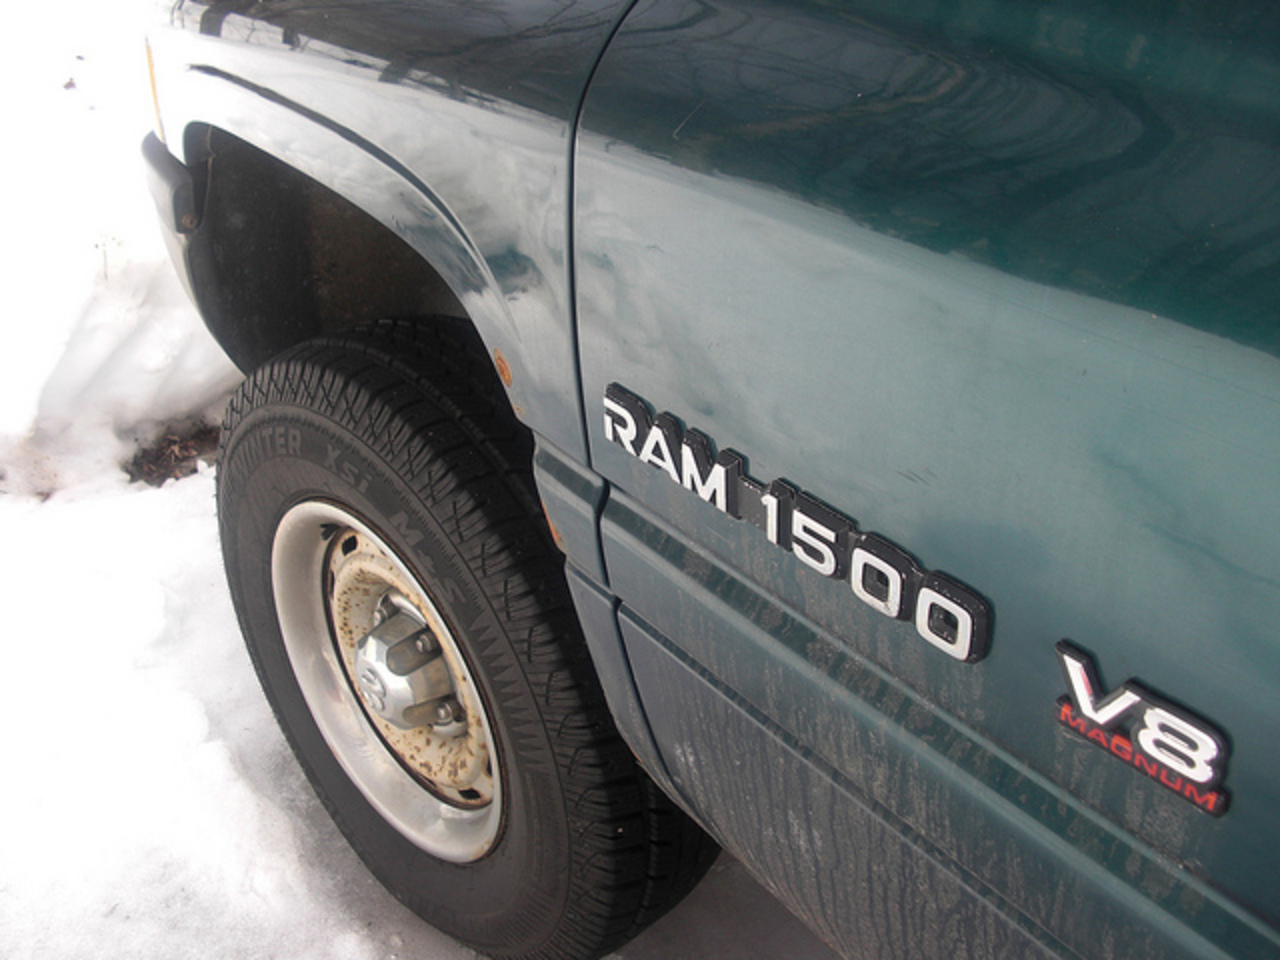 Dodge Ram 1500, V8 Magnum | Flickr - Photo Sharing!